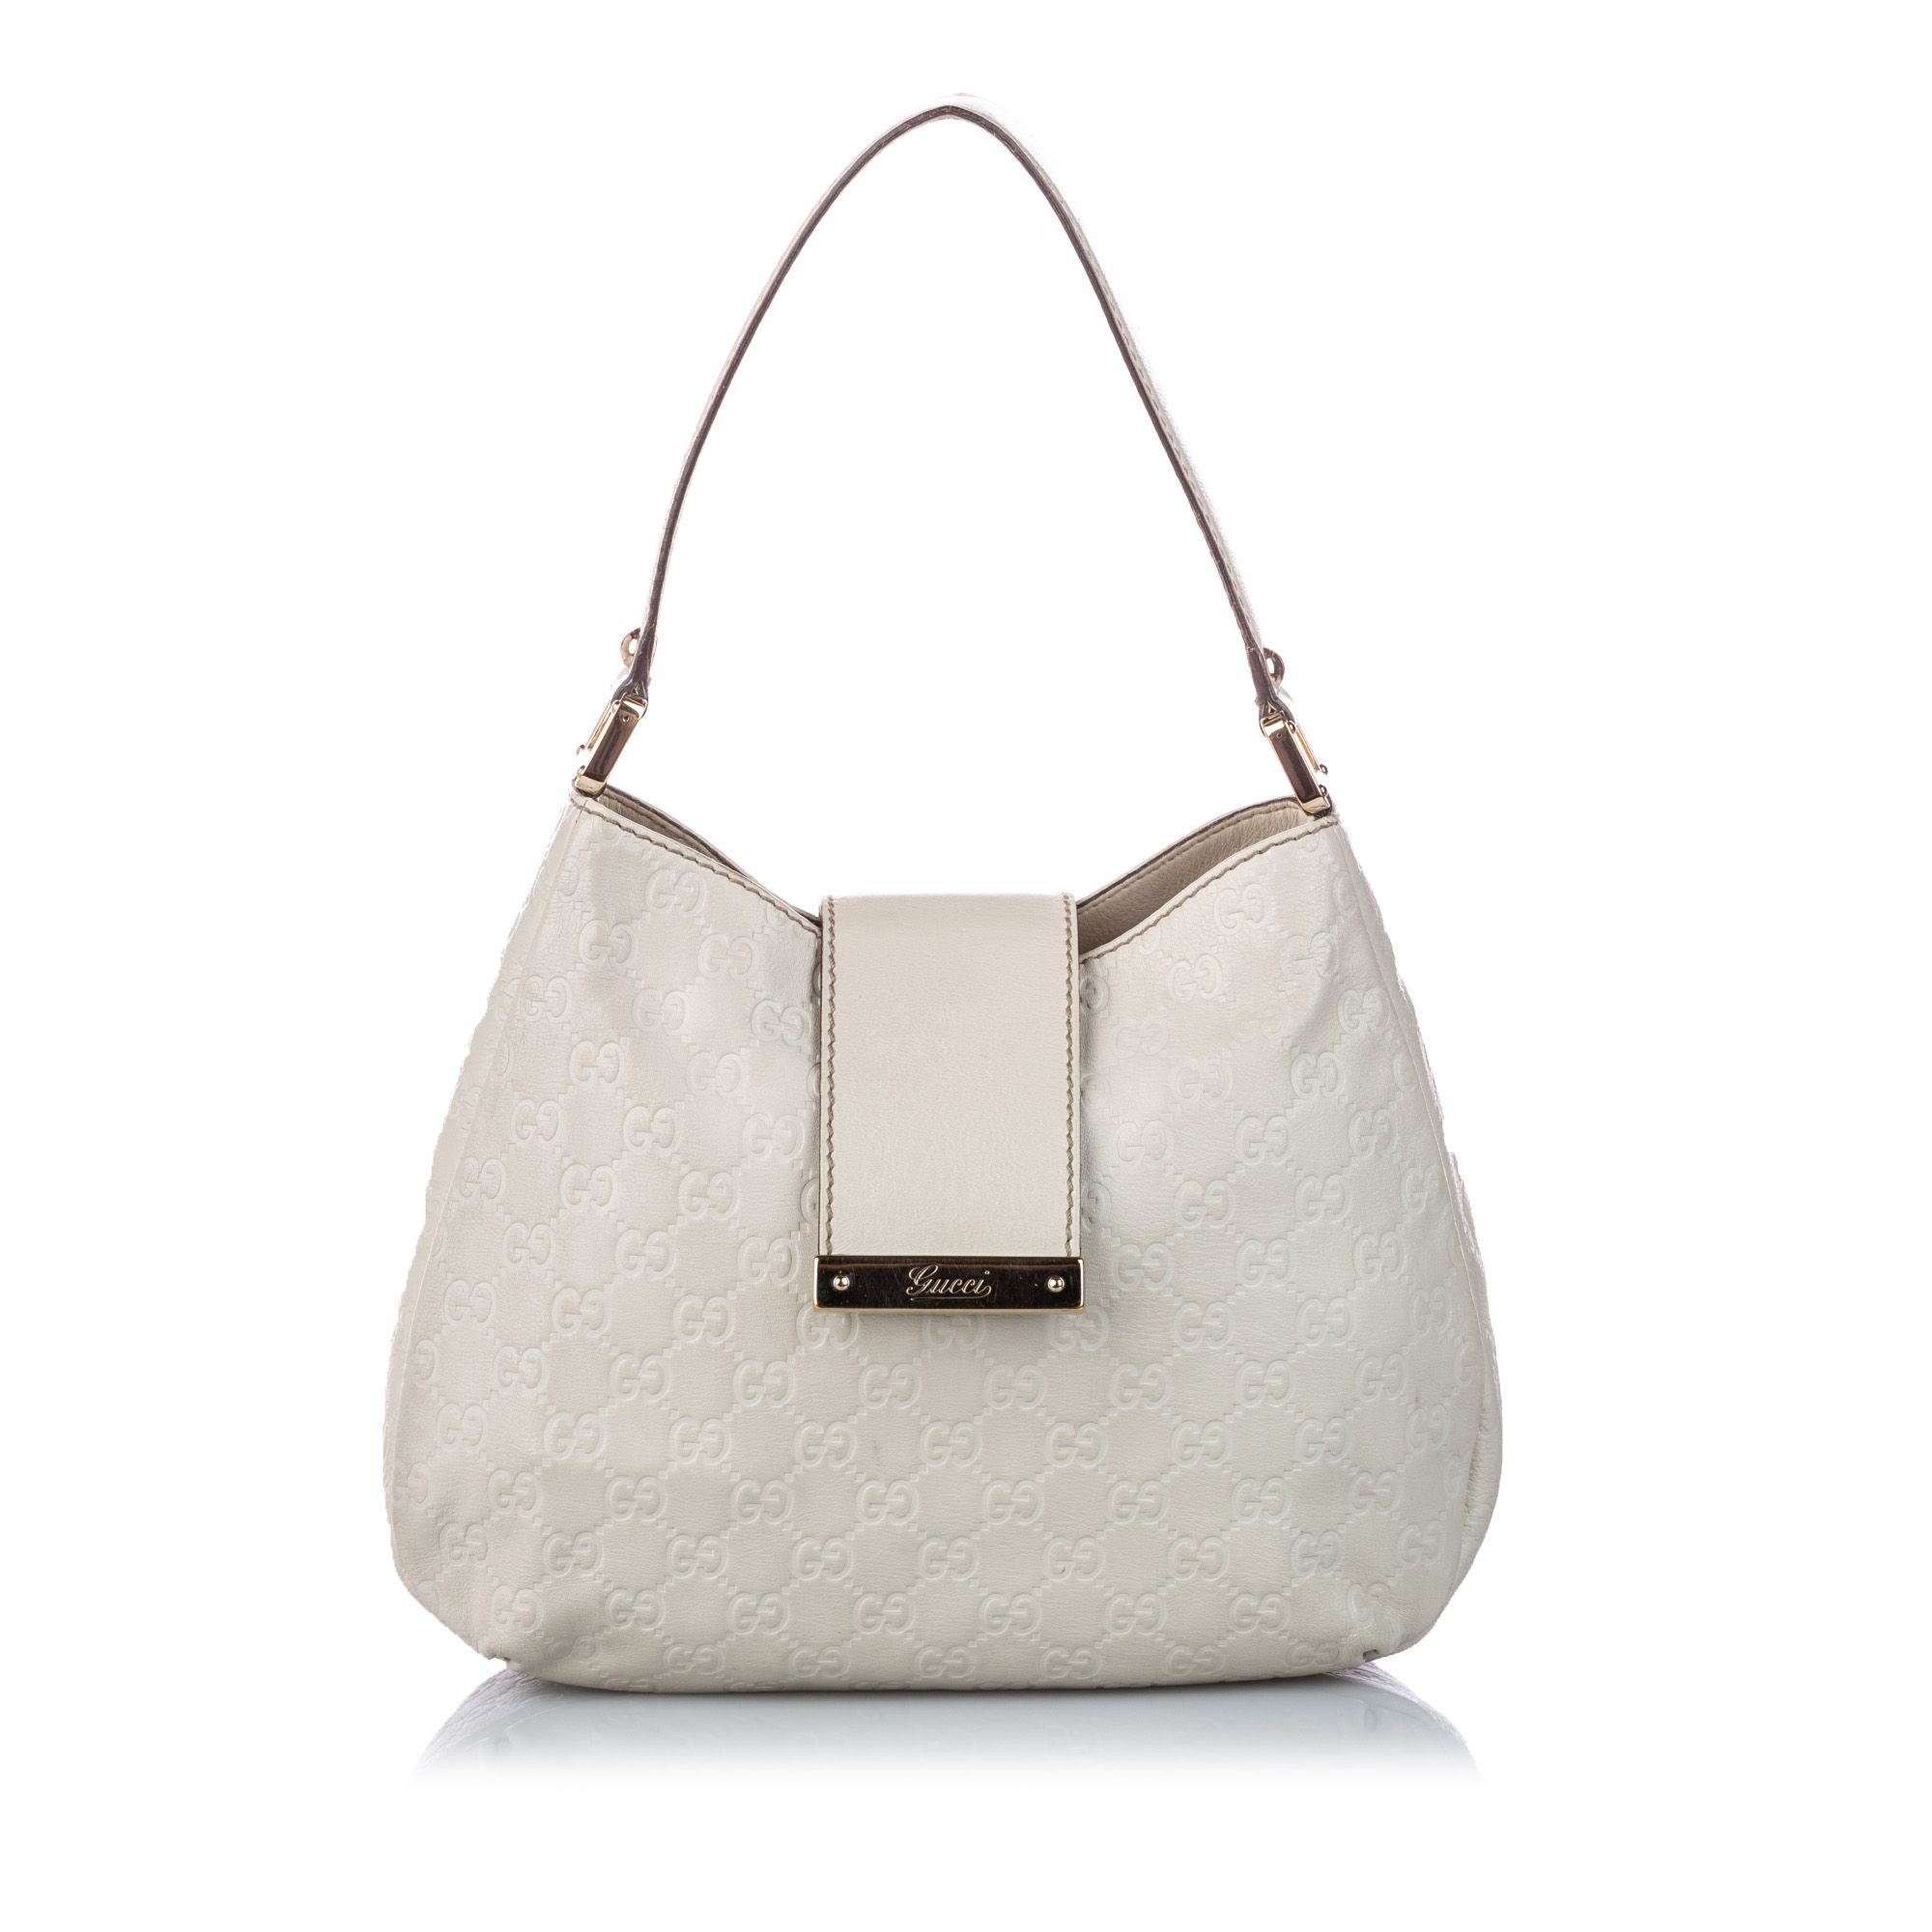 Vintage Gucci Guccissima Leather Shoulder Bag White